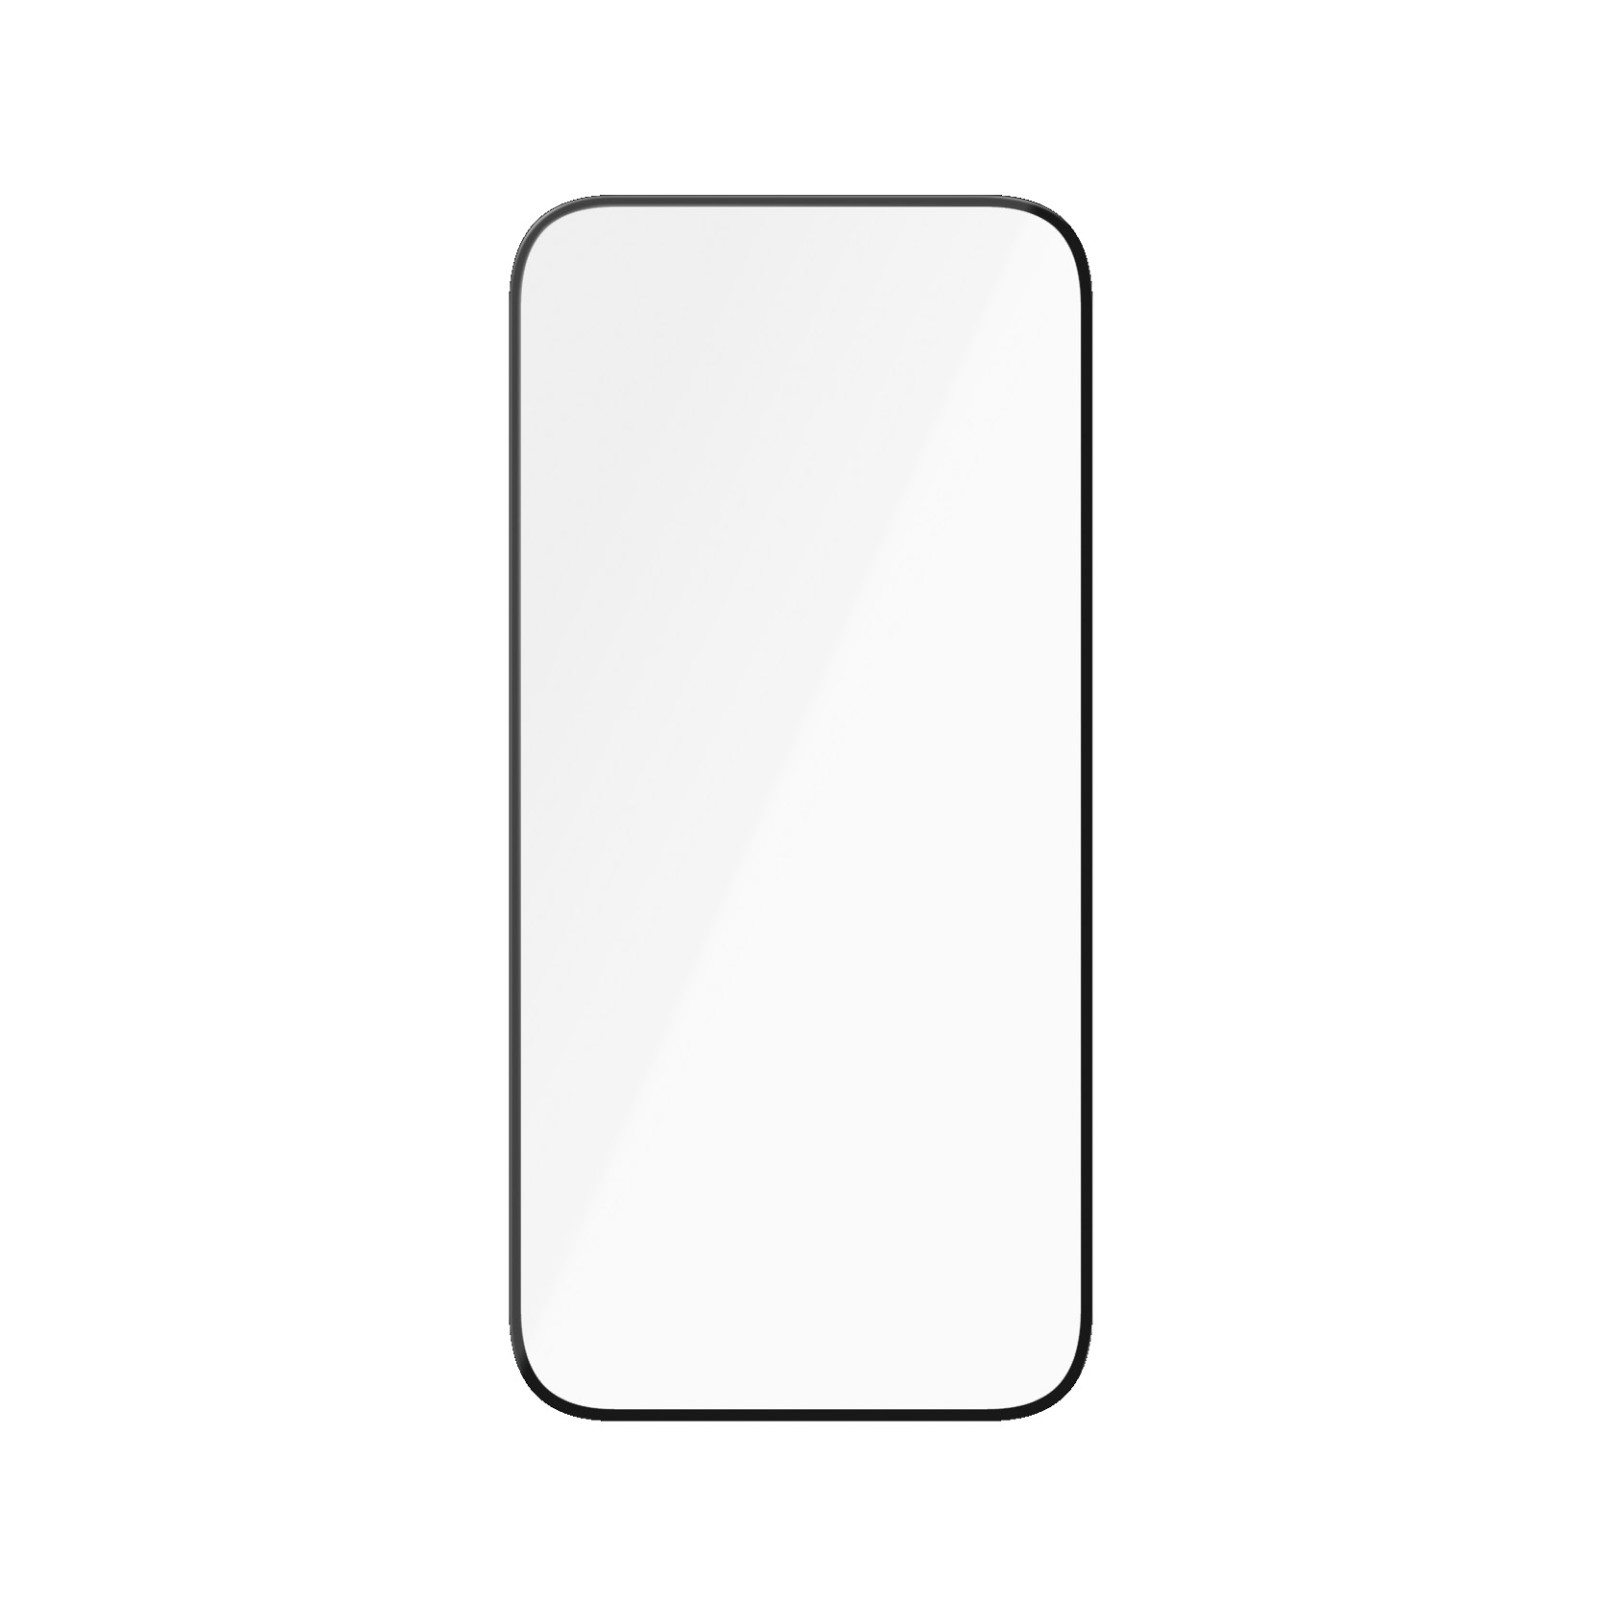  Стъклен протектор PanzerGlass за iPhone 15, Ceramic Protection, UWF, Черен